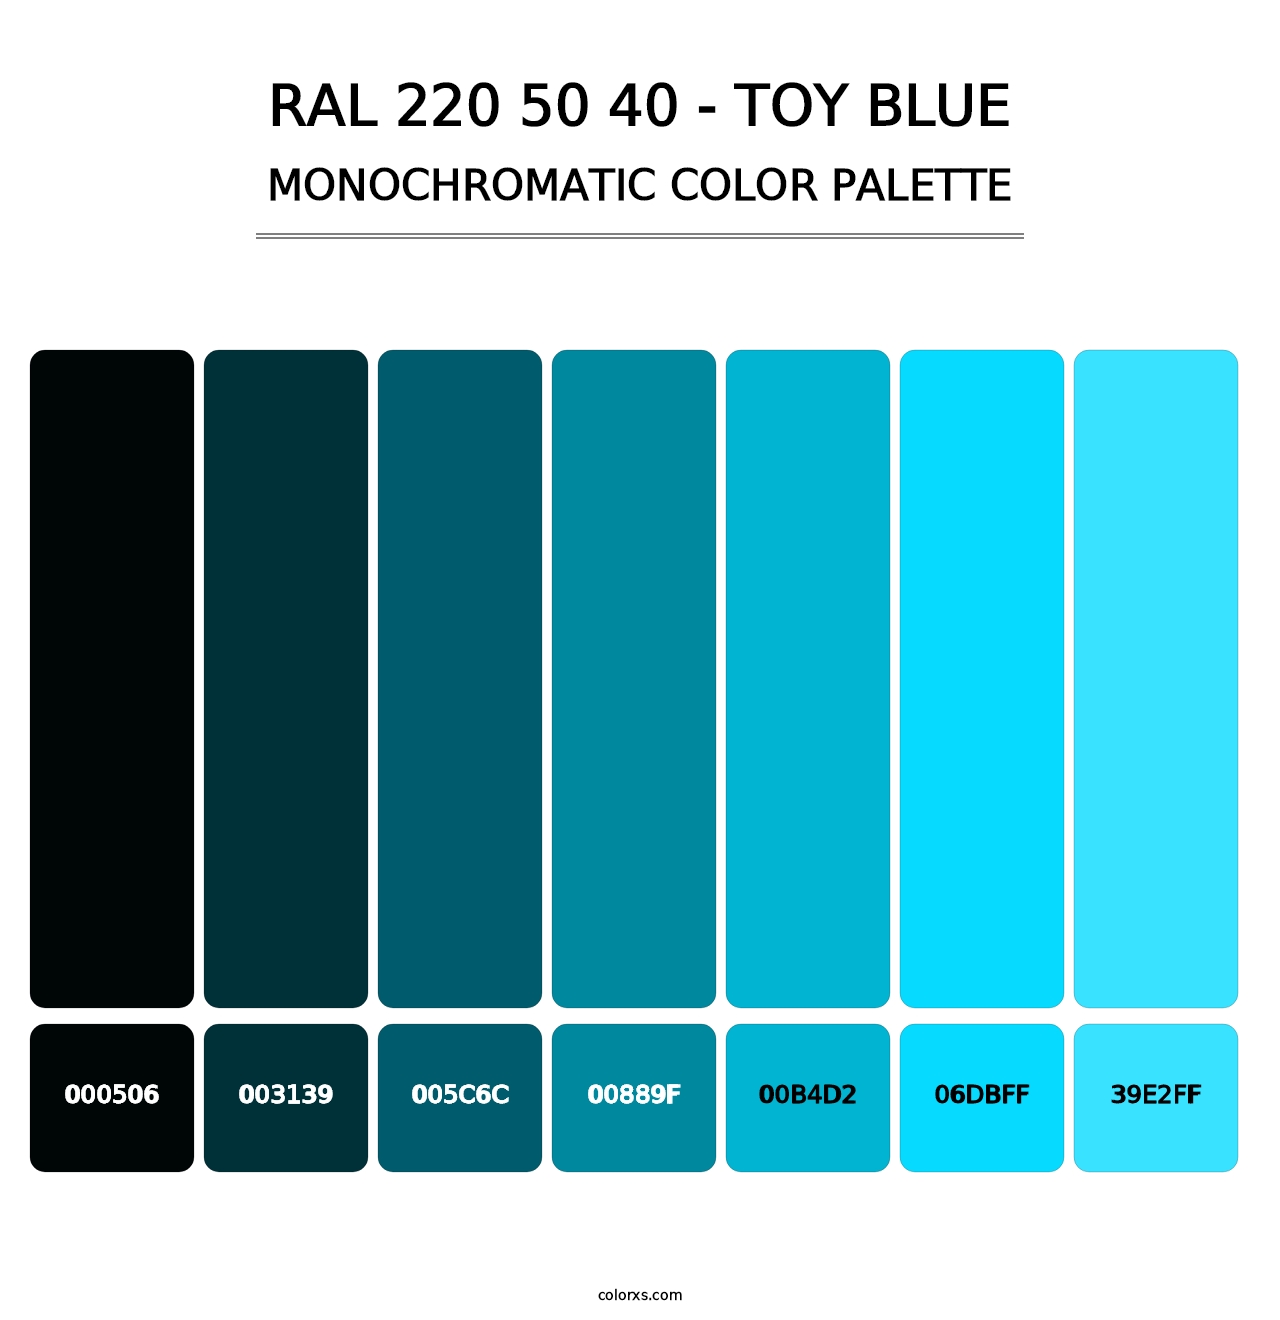 RAL 220 50 40 - Toy Blue - Monochromatic Color Palette